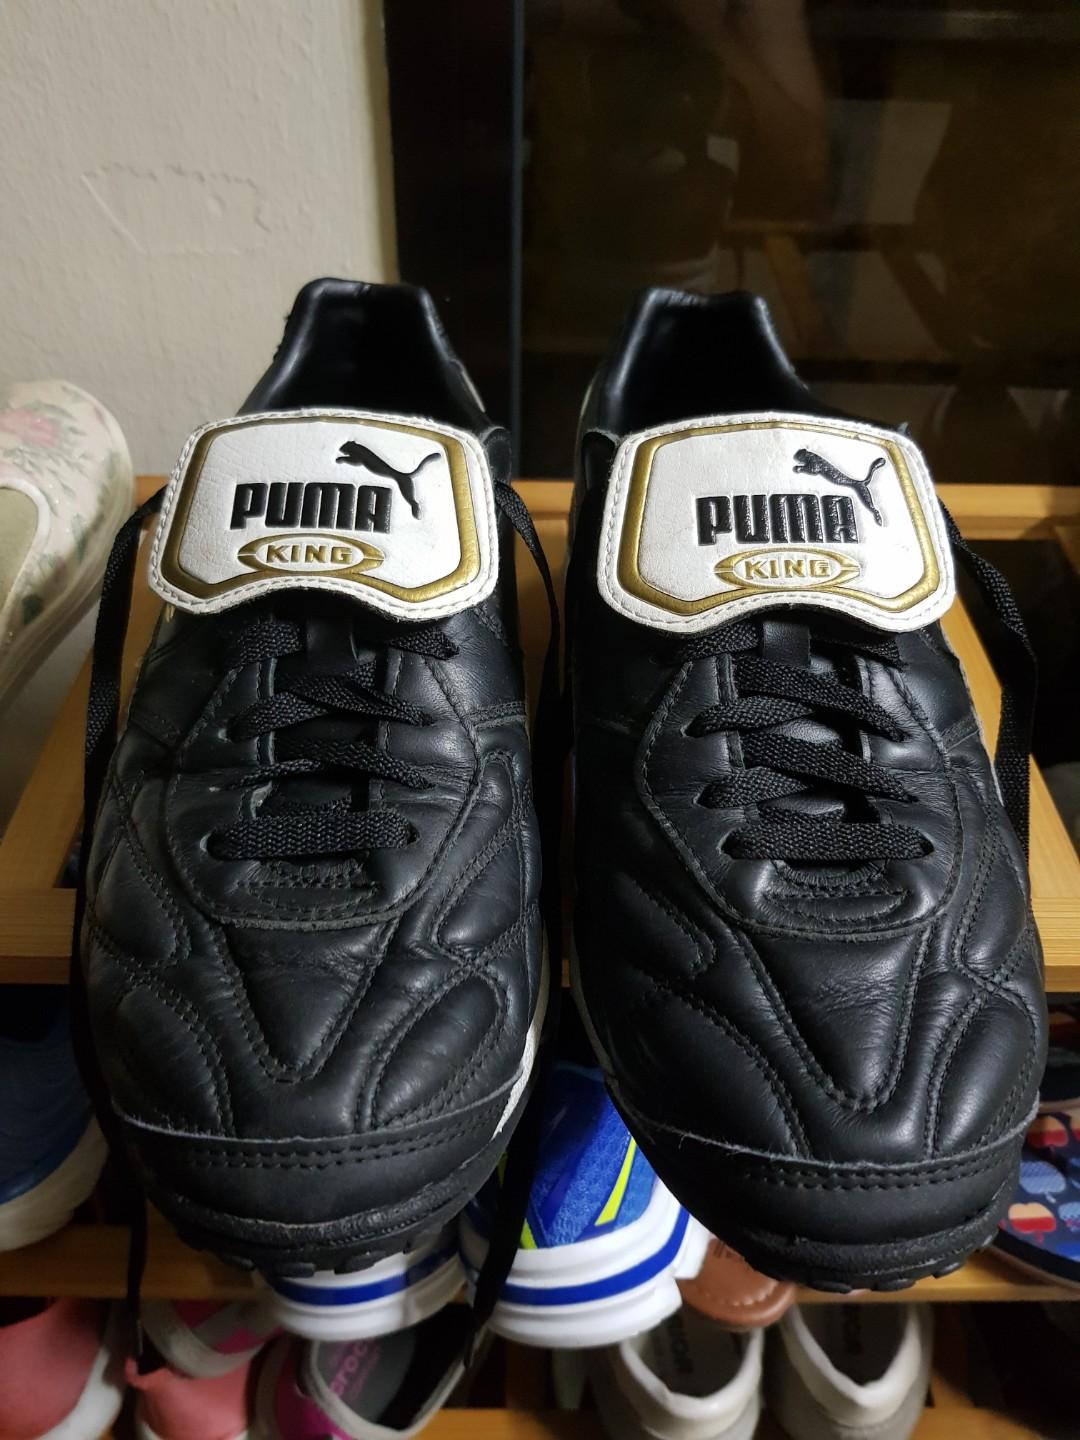 puma king turf soccer shoes